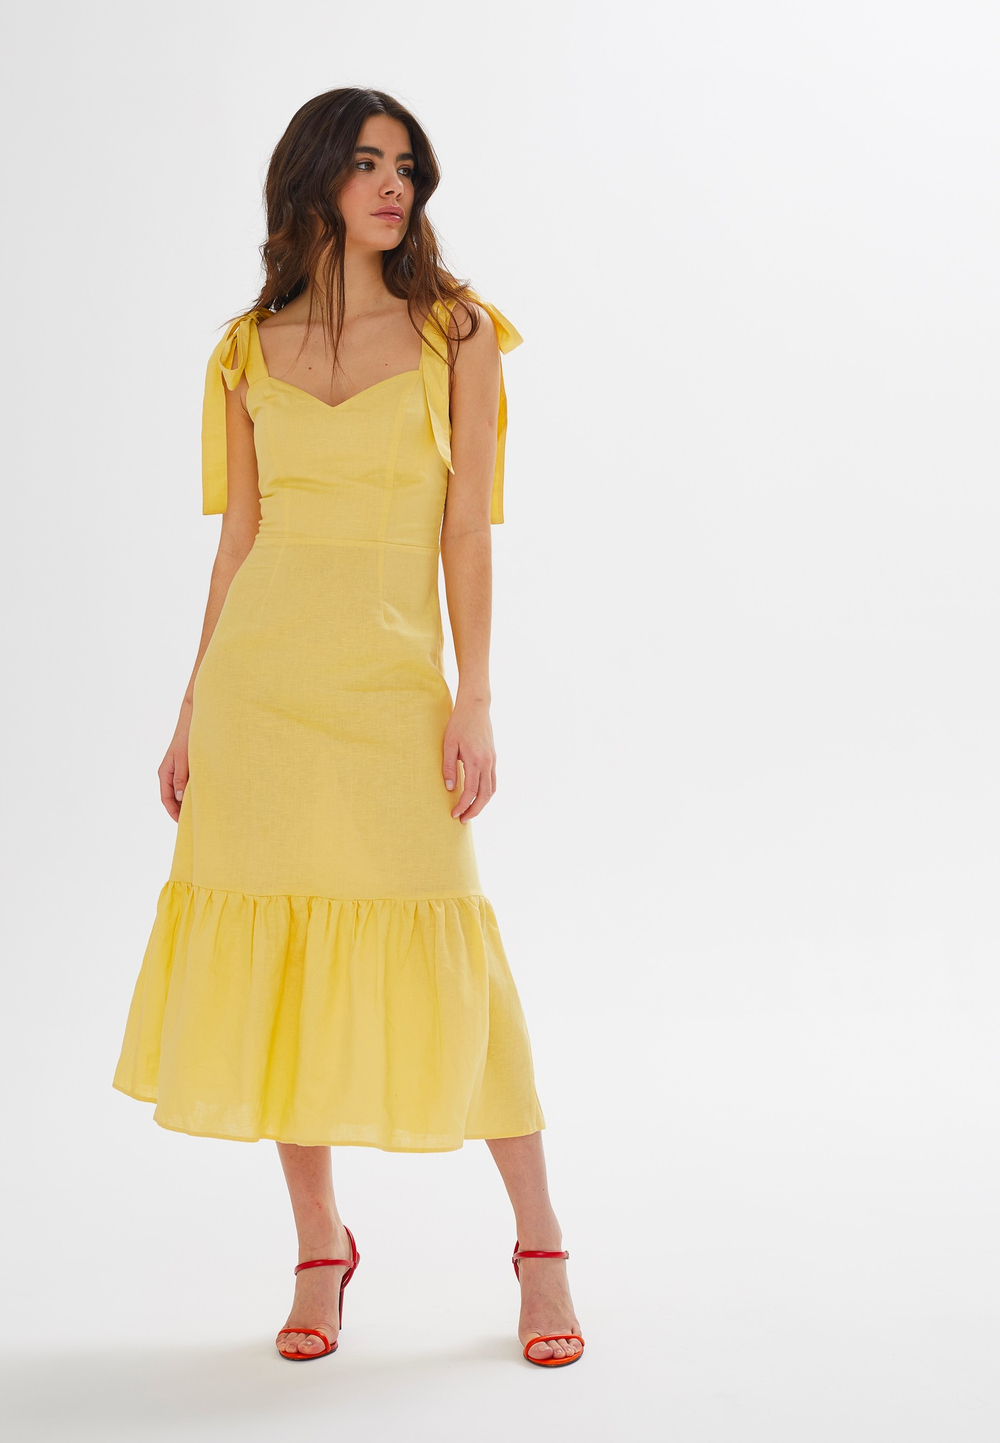 Платье Doll, юбка с воланом, жёлтый